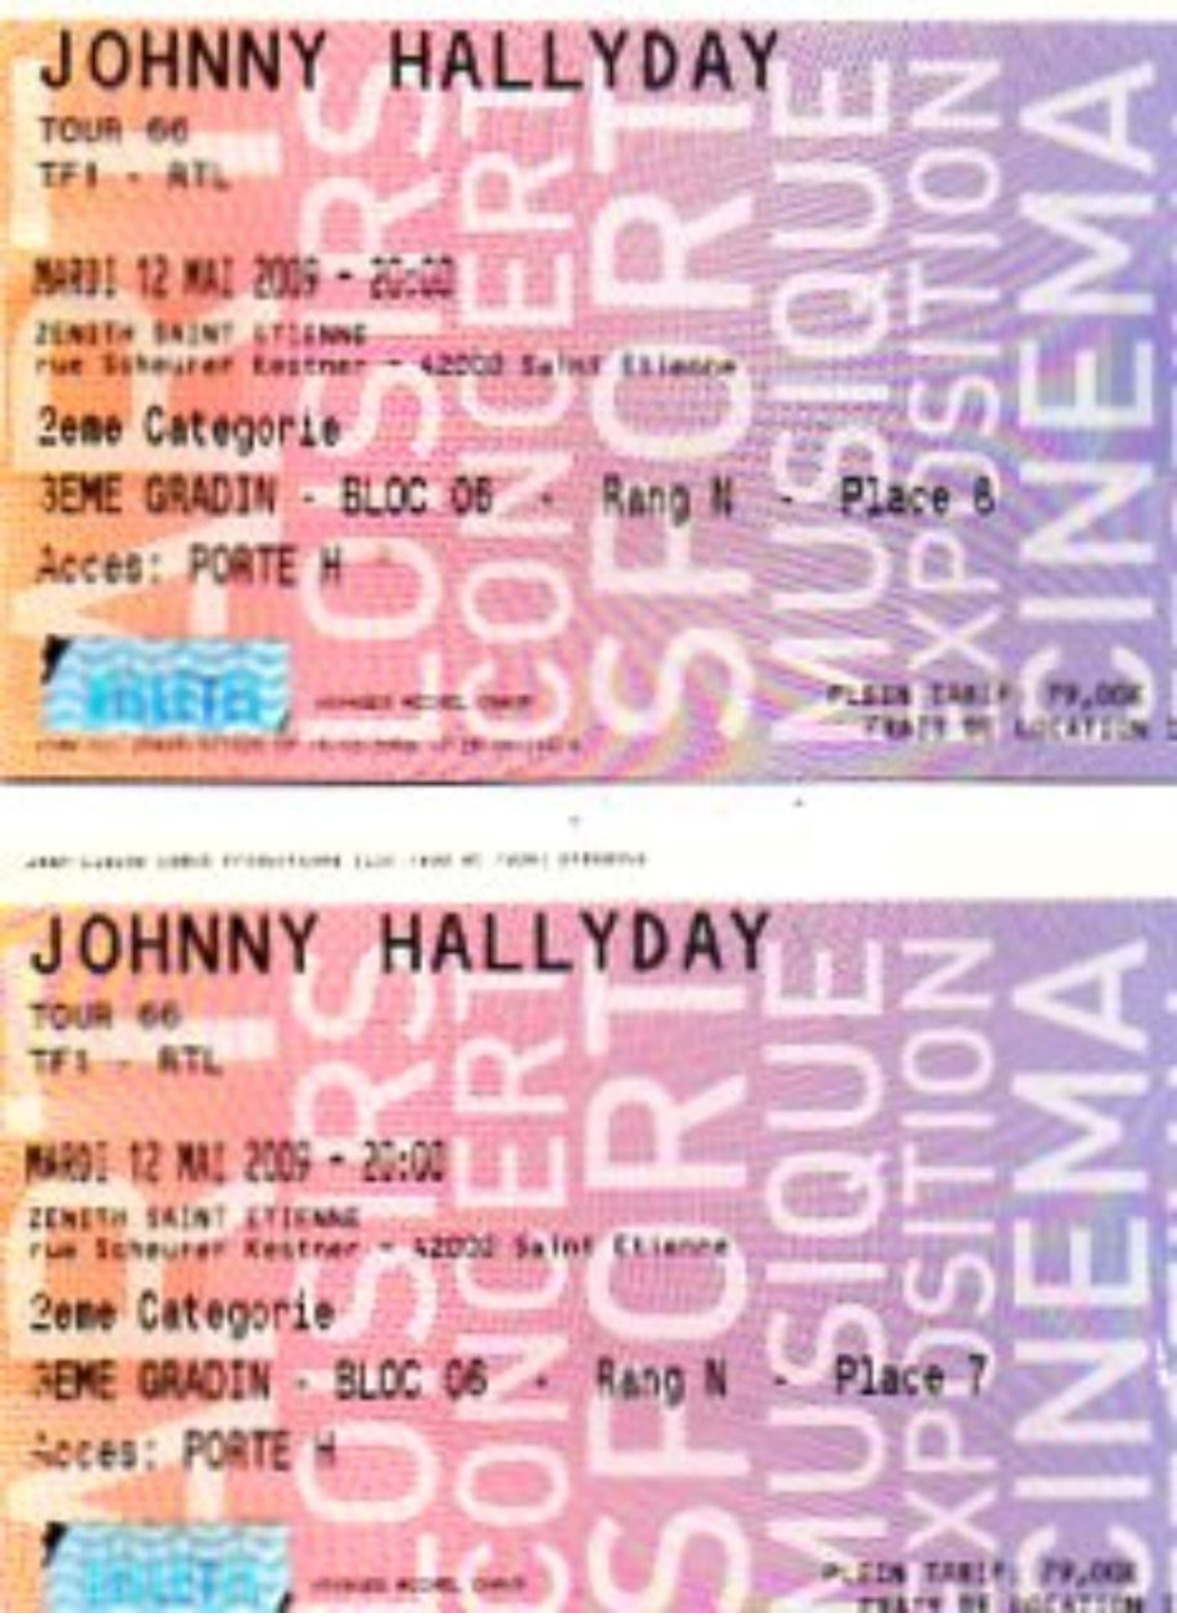 JOHNNY HALLYDAY  Lot 2 Tickets  Concert  2009  Tour 66  Mardi 12/05/2009 St ETIENNE Plein Tarif 79 Euro - Tickets De Concerts